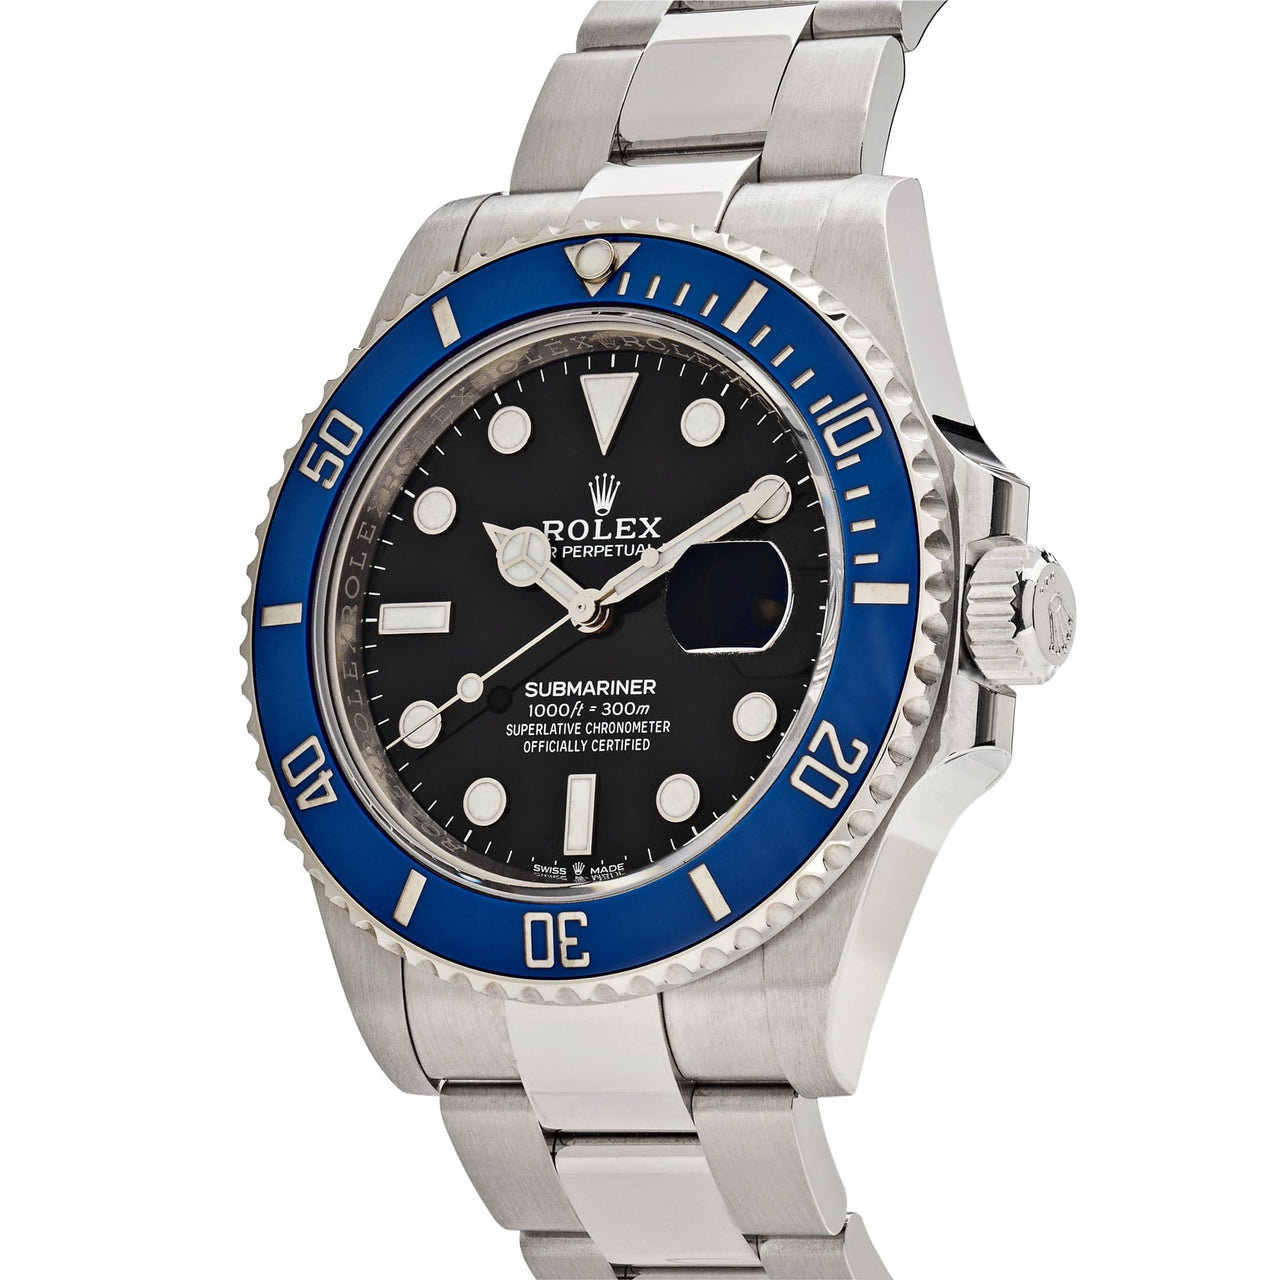 Rolex Submariner Date 41 White Gold Black Dial Blue Bezel 126619LB (2022) wrist aficionado